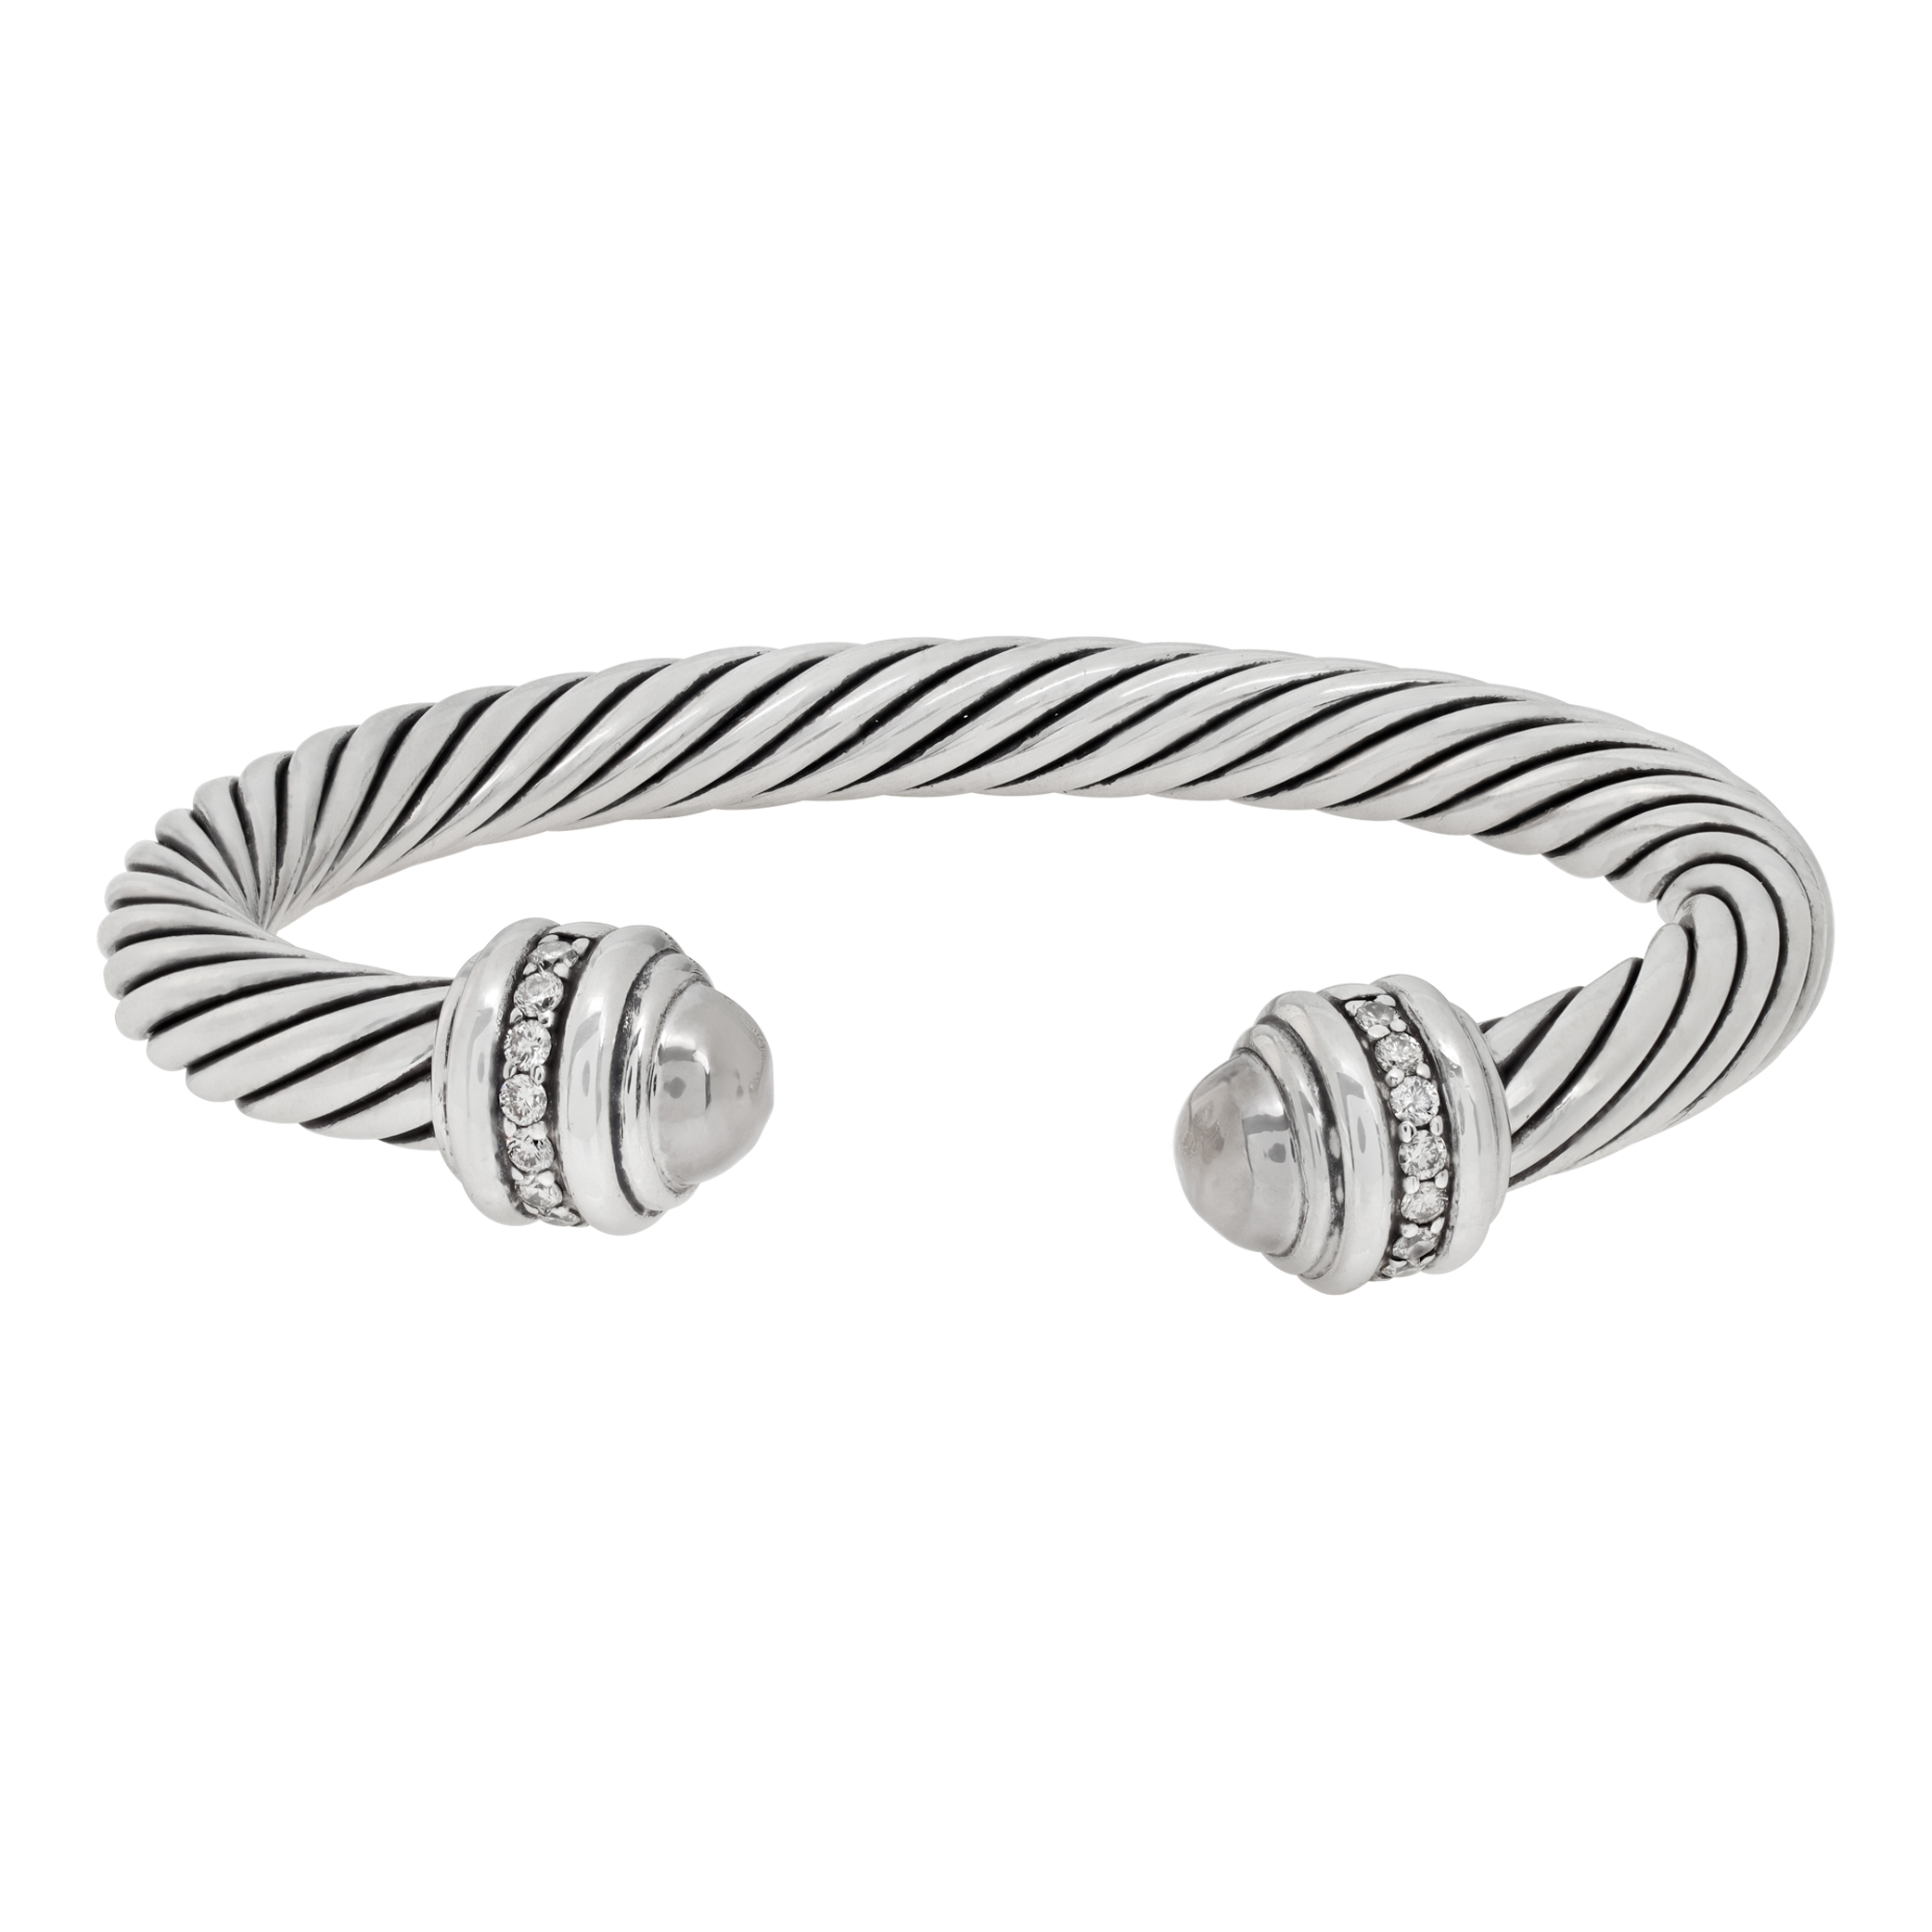 David Yurman sterling silver cable bracelet with diamonds